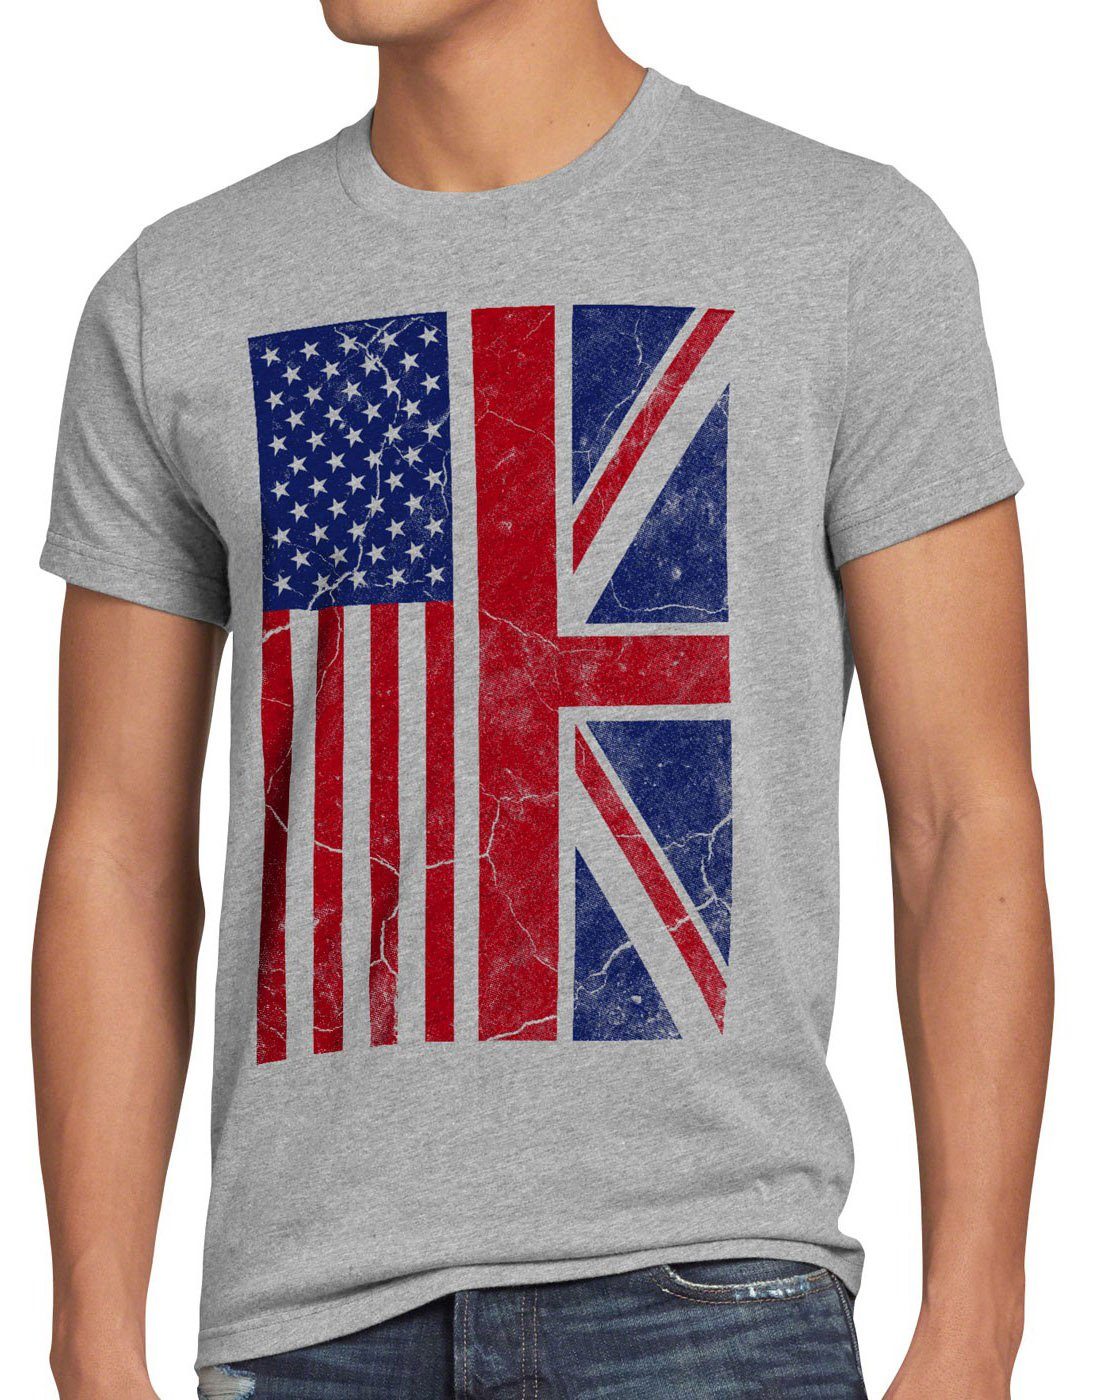 style3 Print-Shirt Herren T-Shirt USA Amerika Union Jack Flagge Flag Stars Stripes brexit England grau meliert